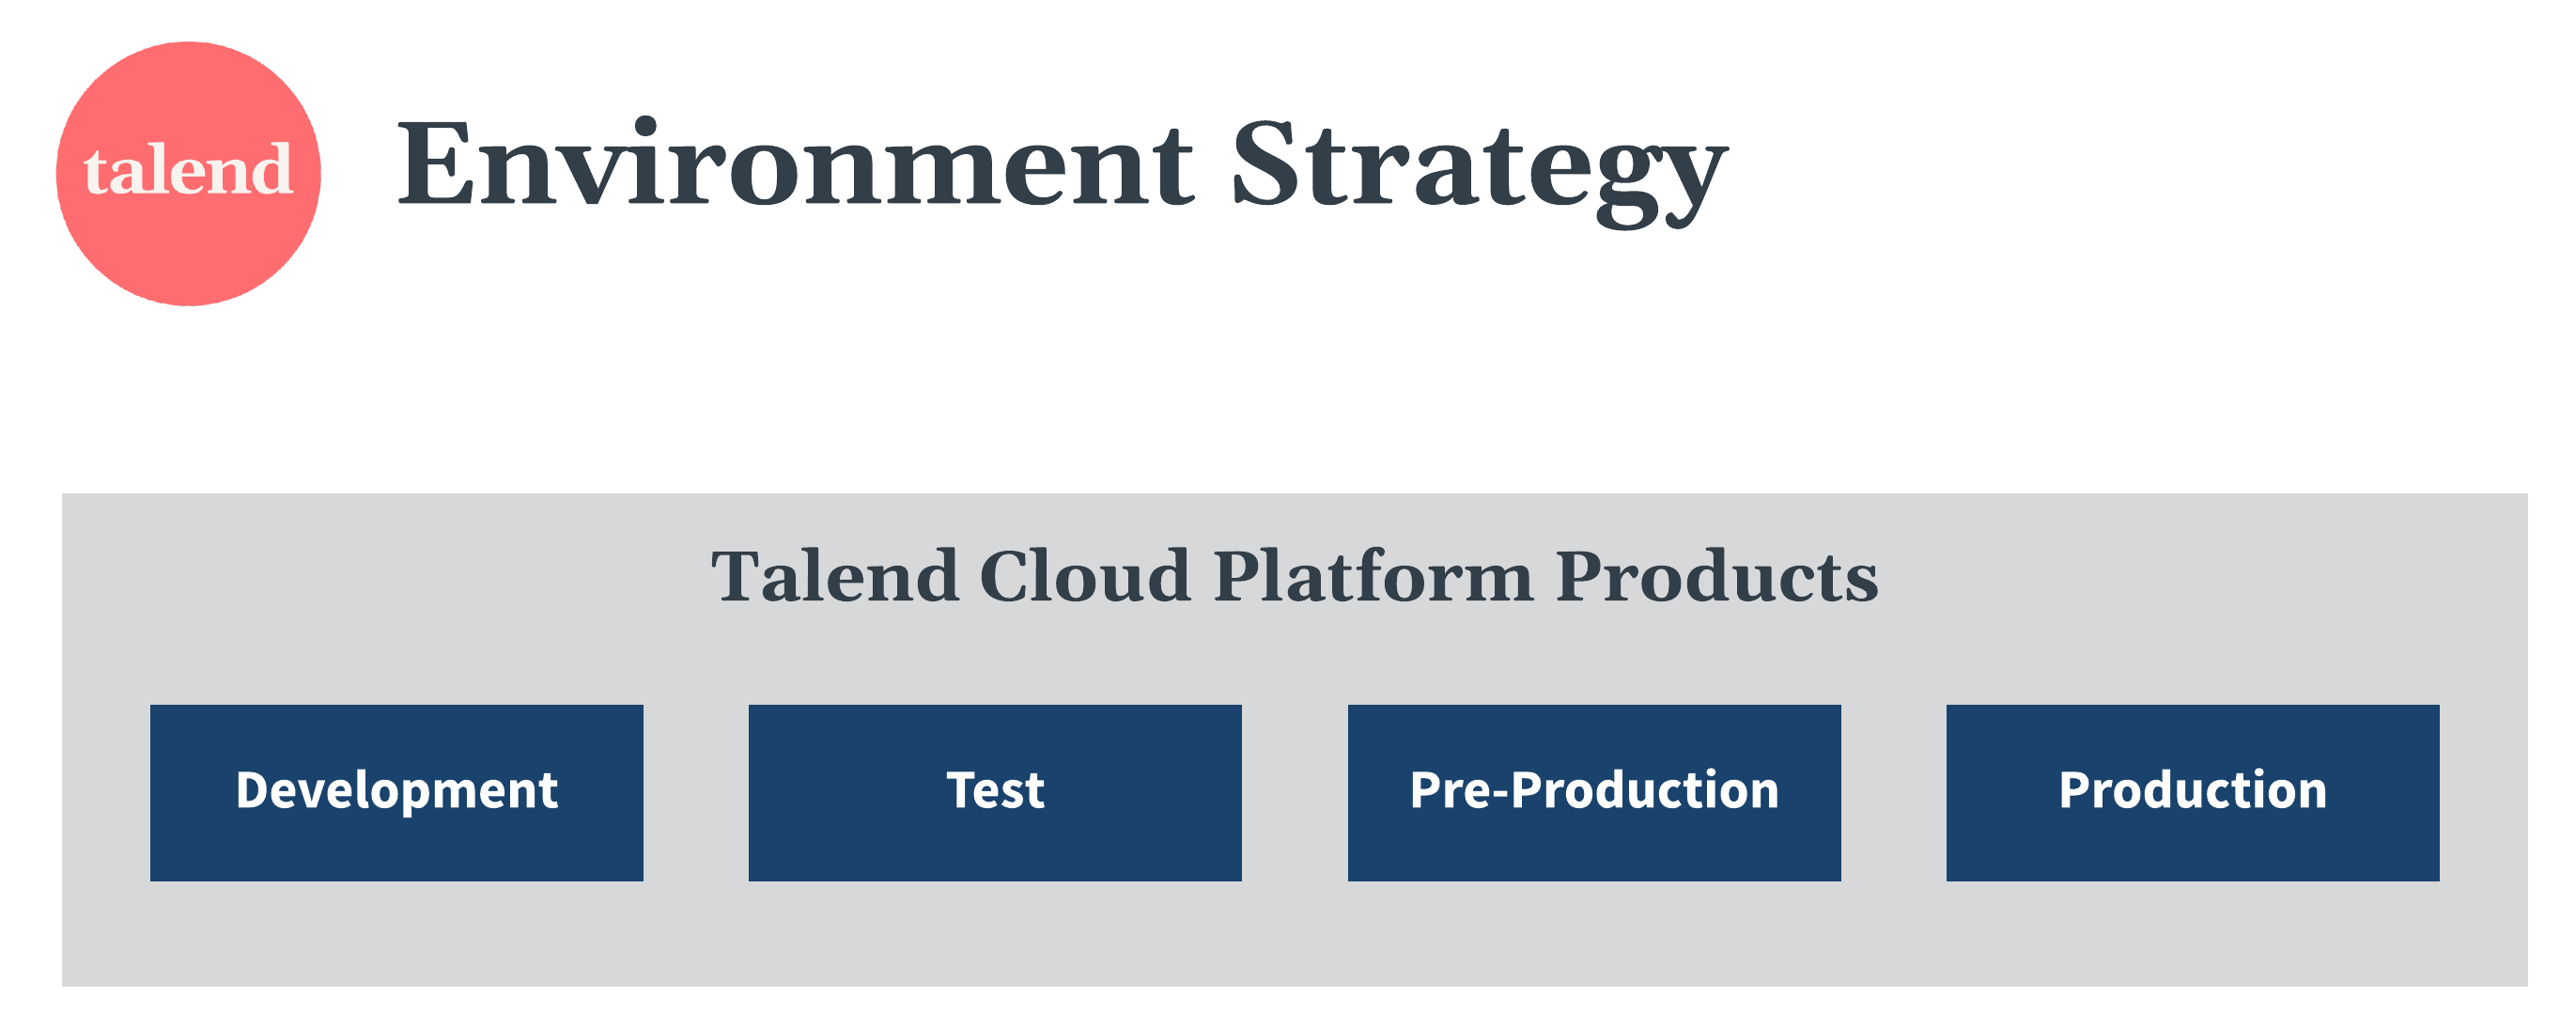 Talend Cloudのプラットフォーム製品の環境戦略図。